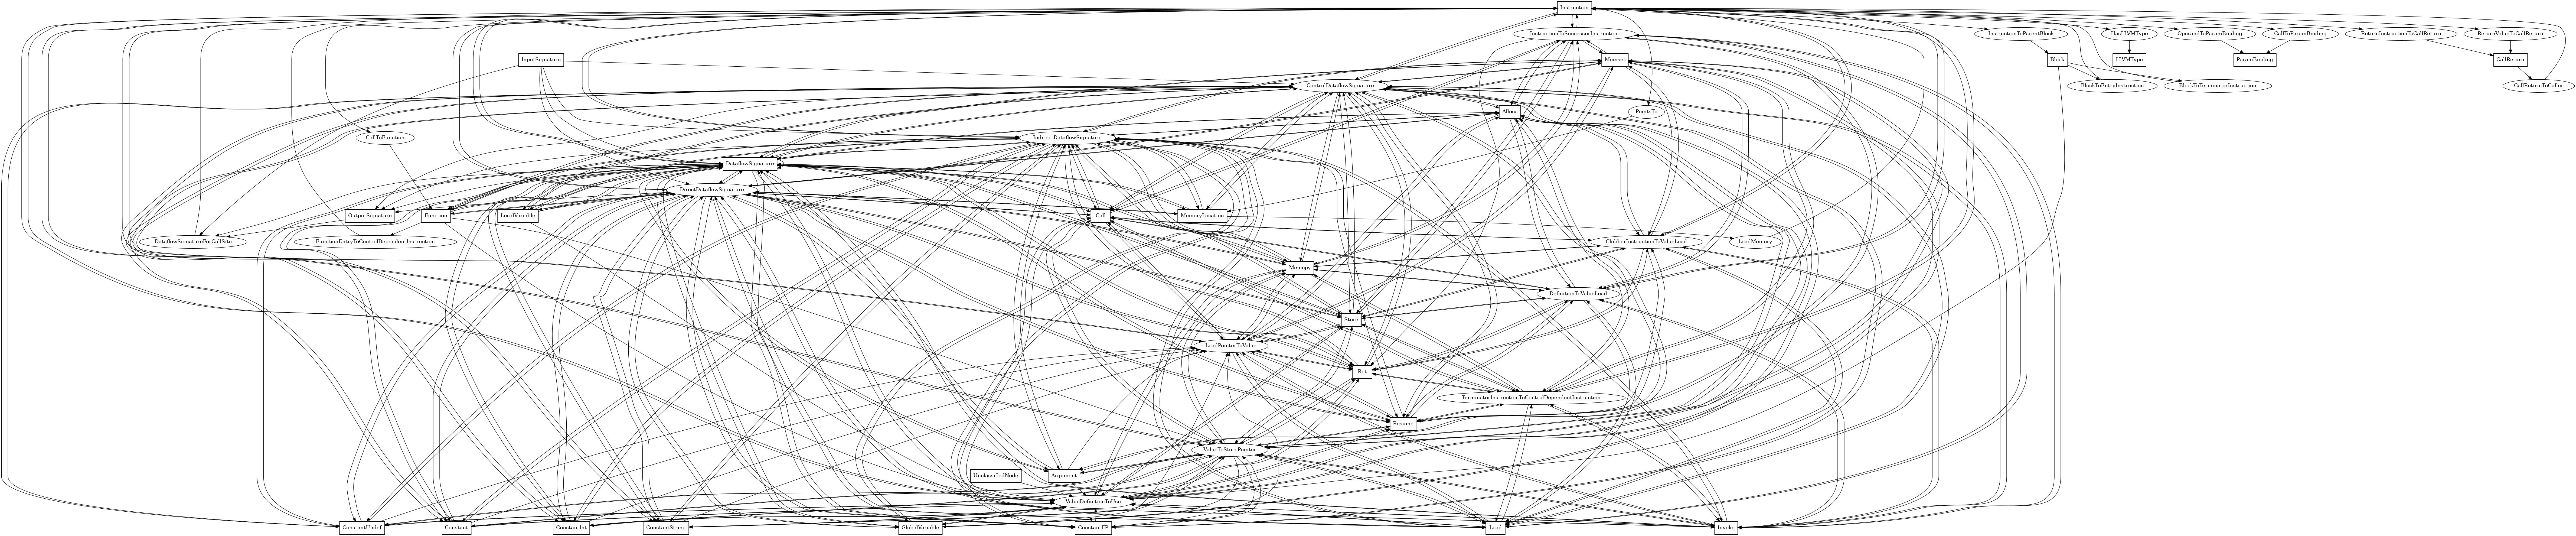 Entity-relationship diagram for Instruction nodes